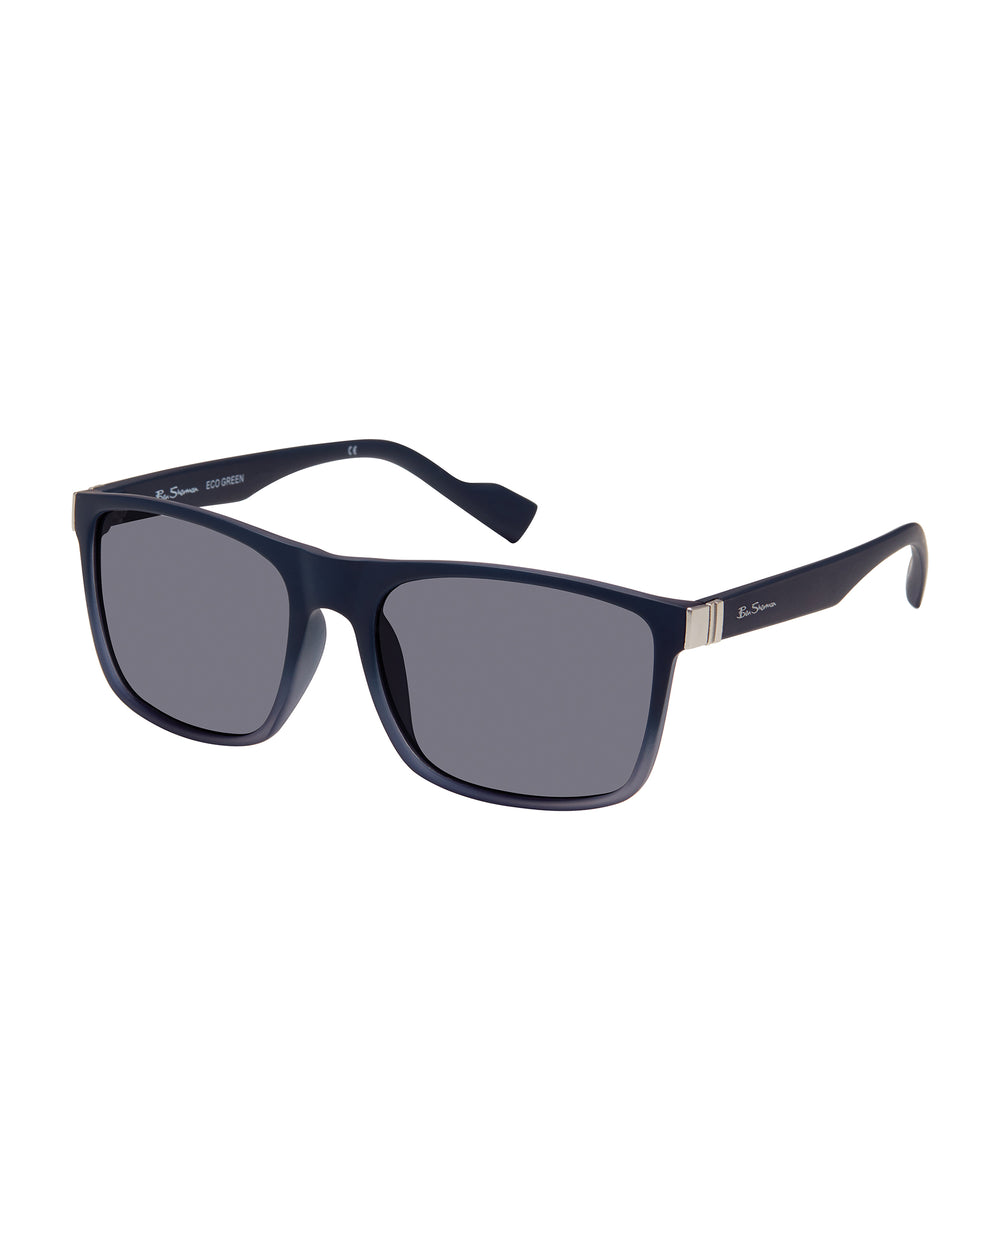 Noah Eco-Green Sunglasses - Matte Navy Fade/Grey